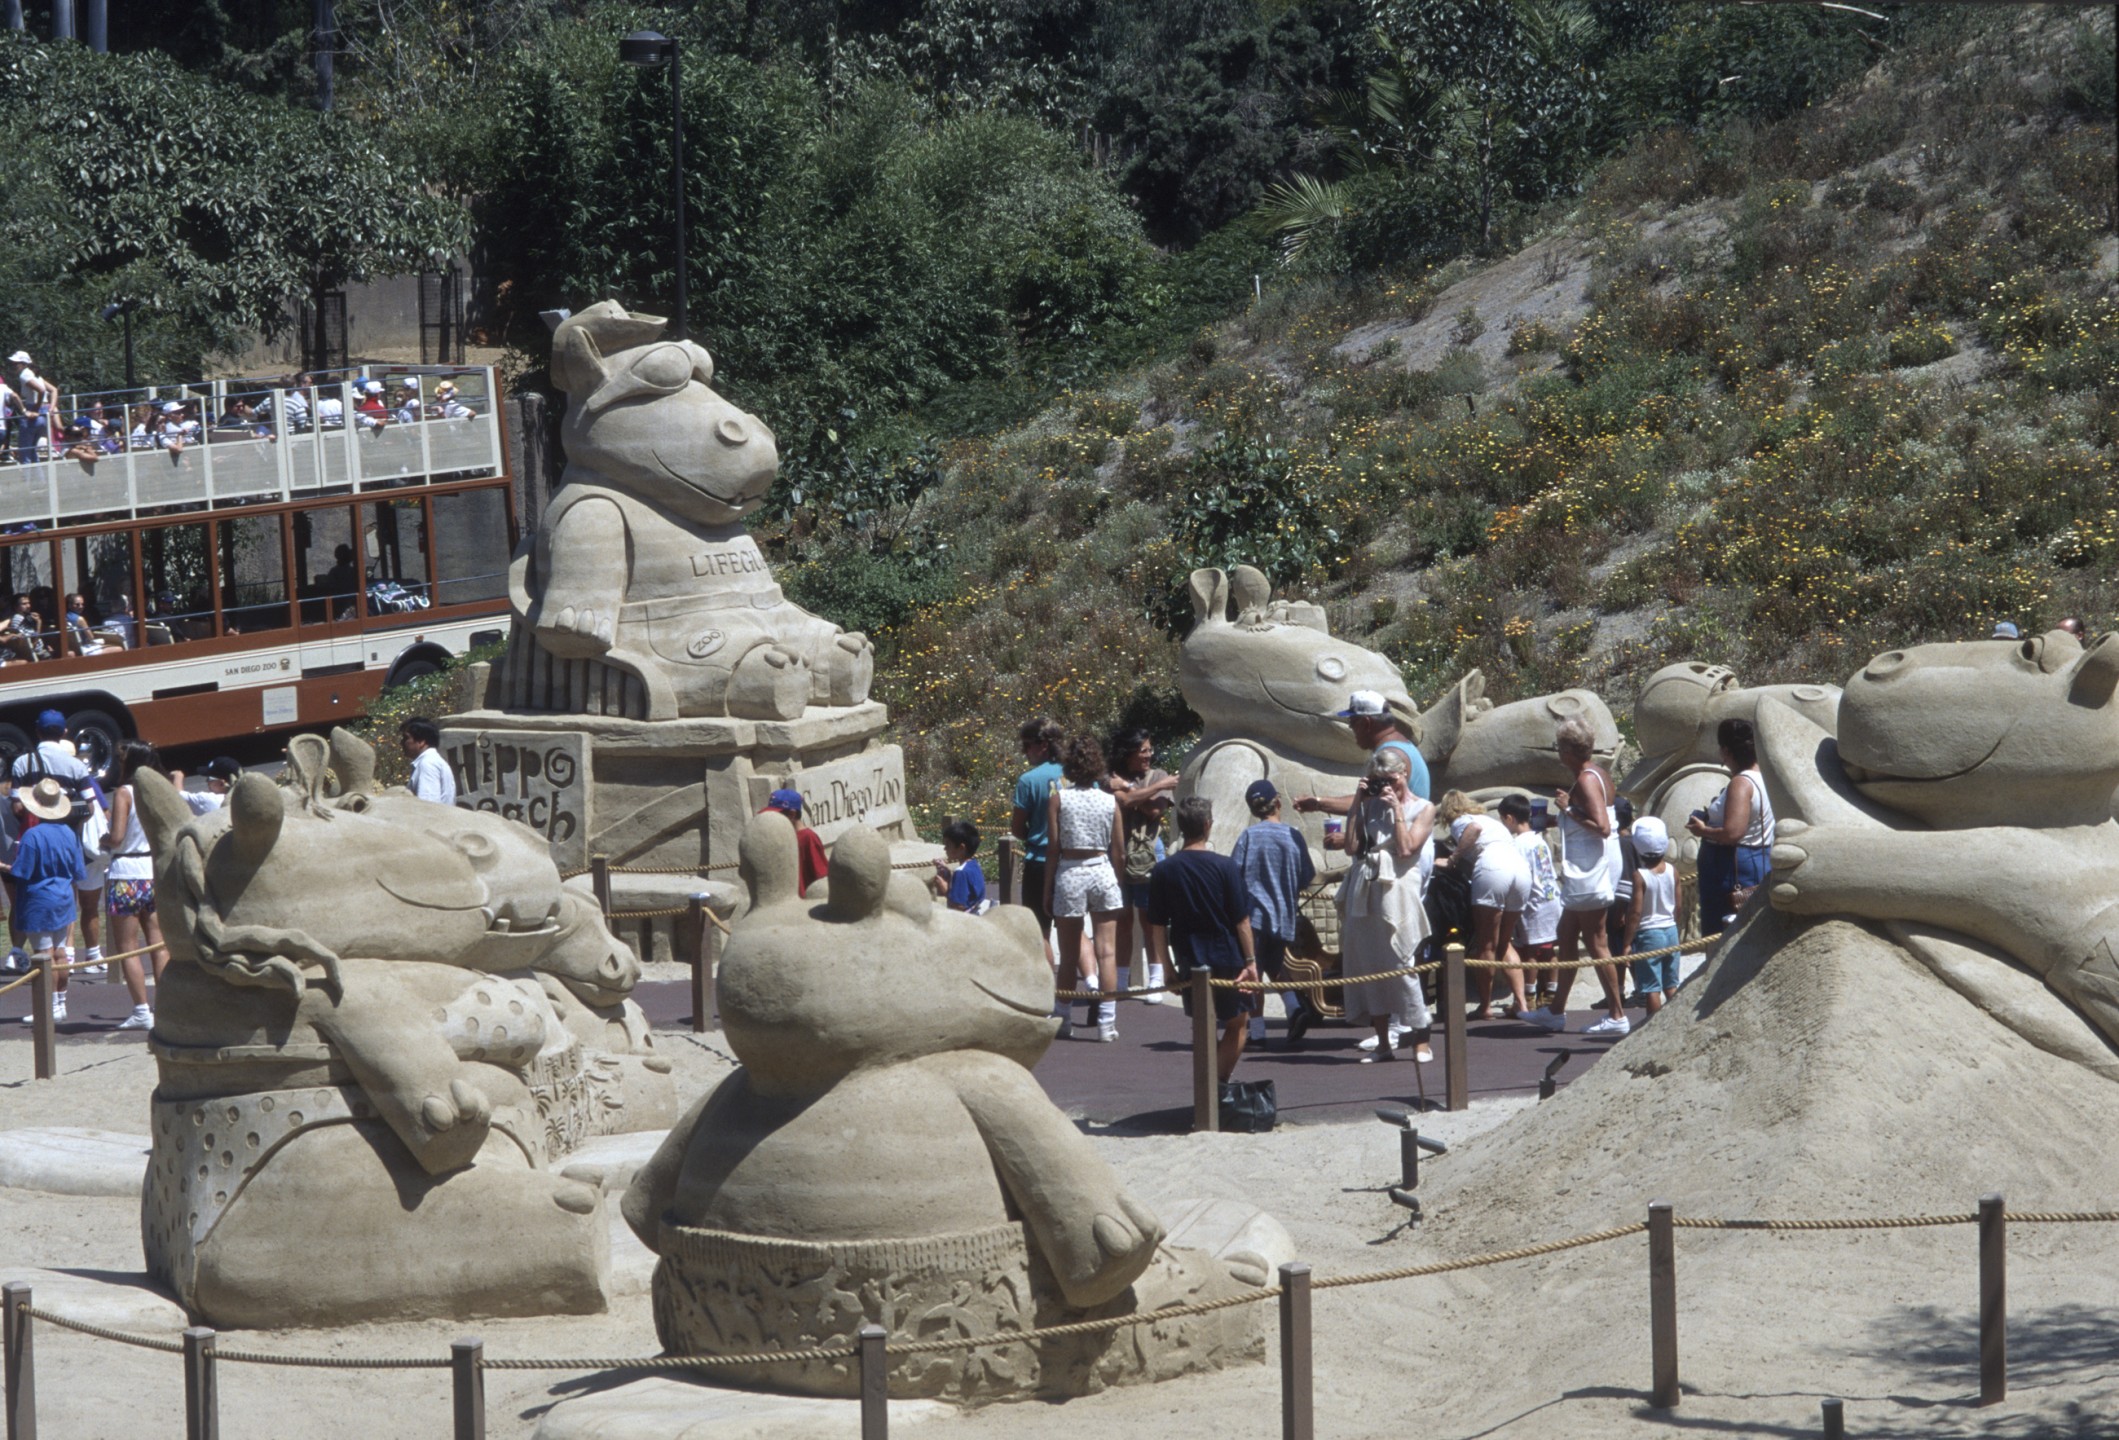 Hippo Beach sand sculptures